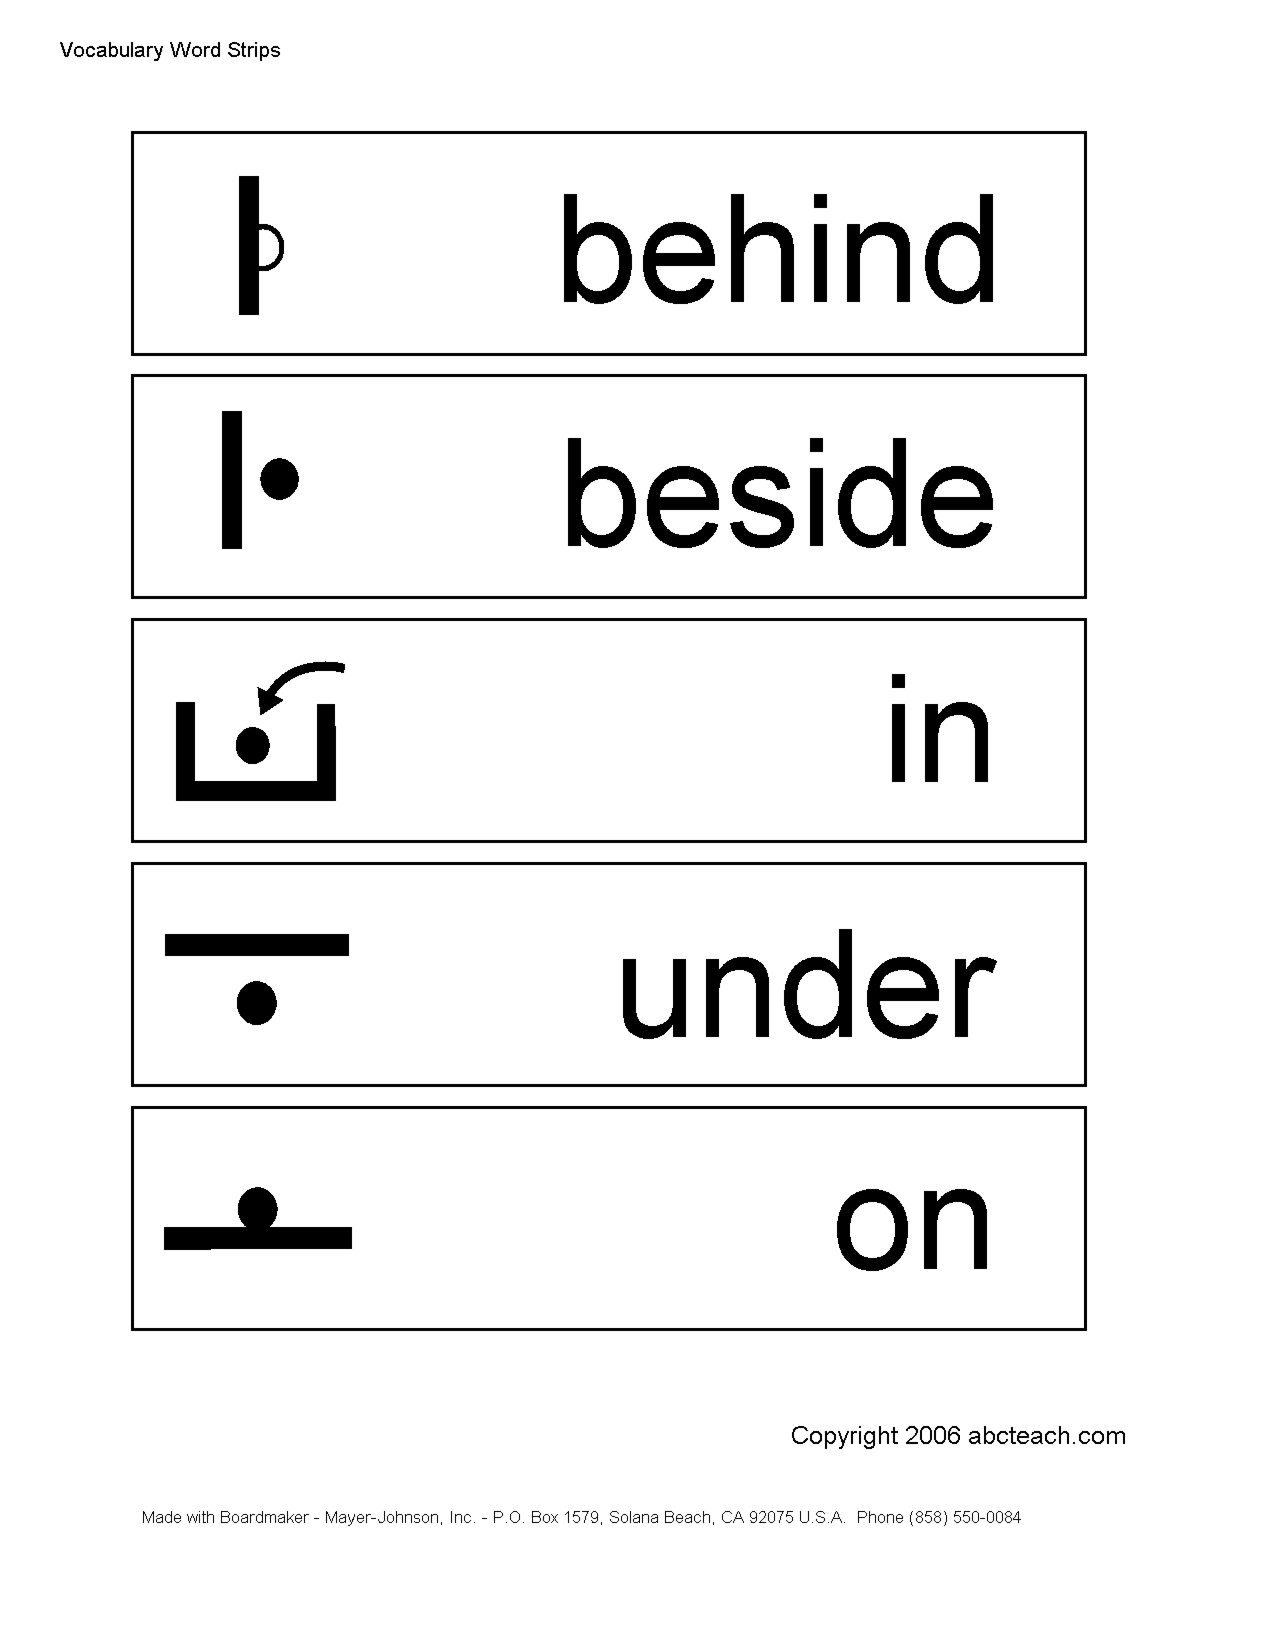 15 Best Images of Preposition Worksheets For Kids - Preposition